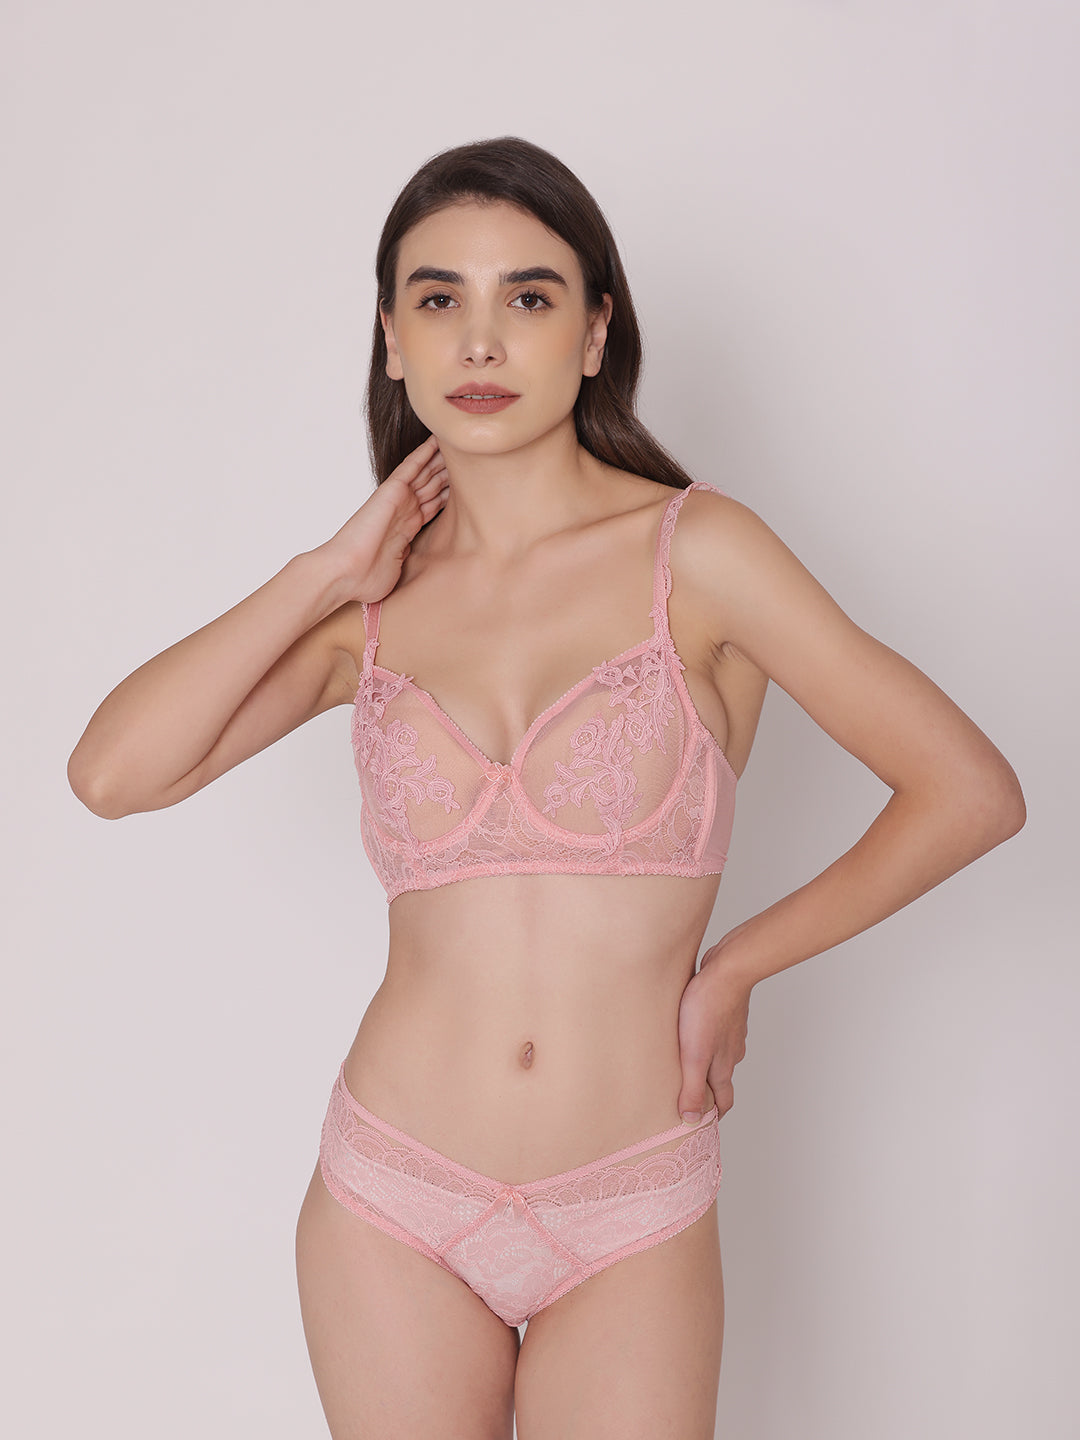 Taylor- Cute Bra Set with sexy brief (Pink, Black, Blue) – Treasure chest  xoxo